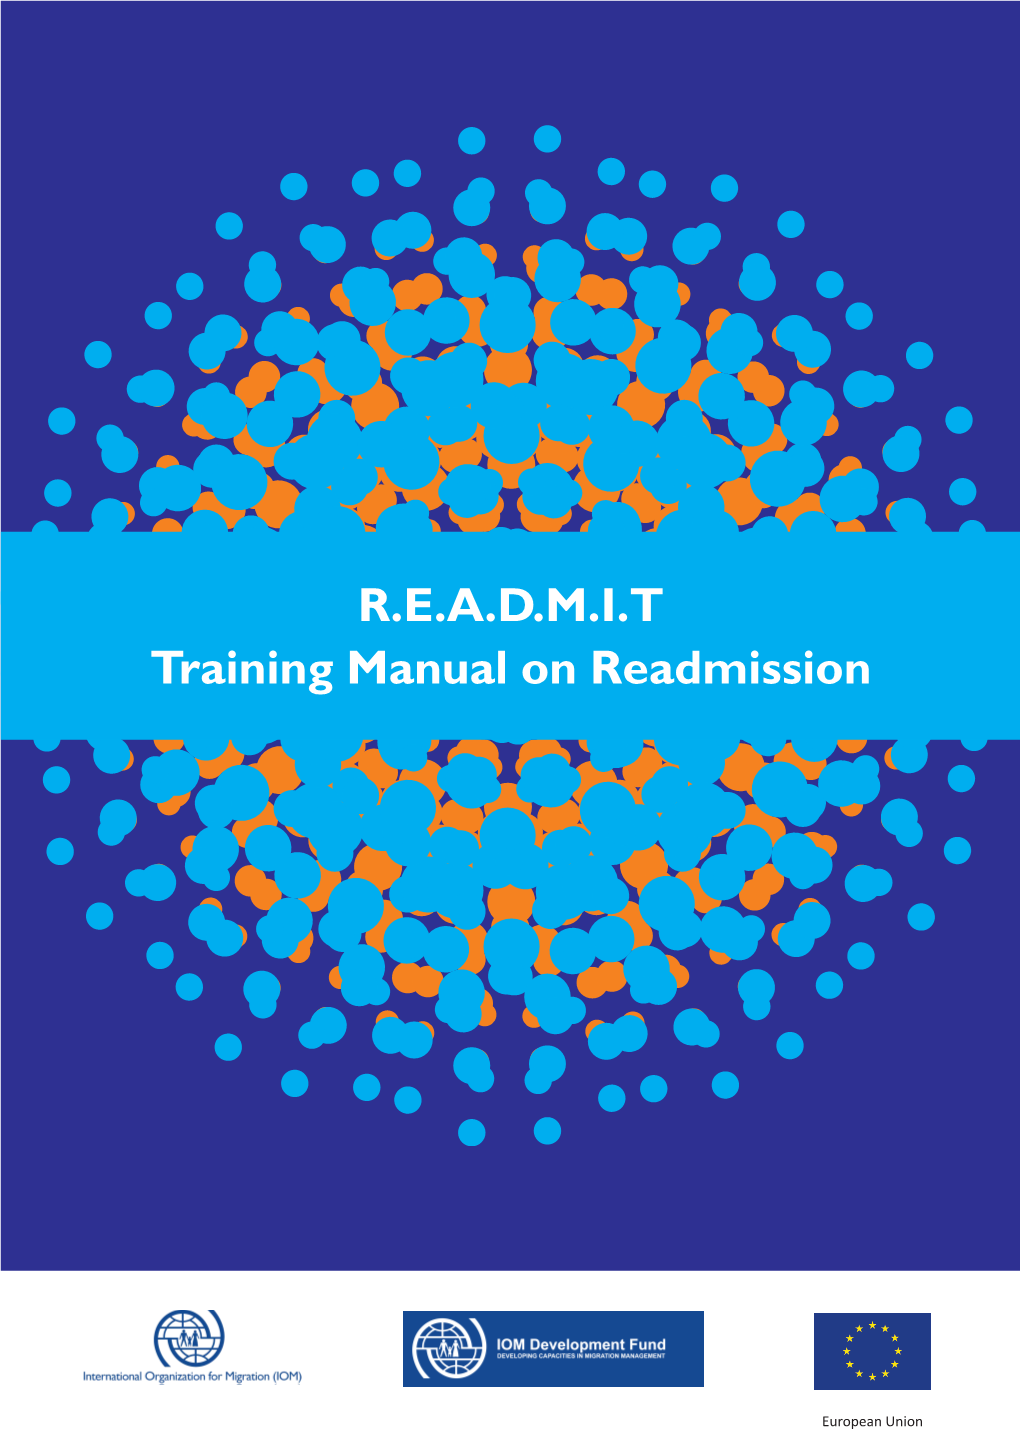 R.E.A.D.M.I.T Training Manual on Readmission